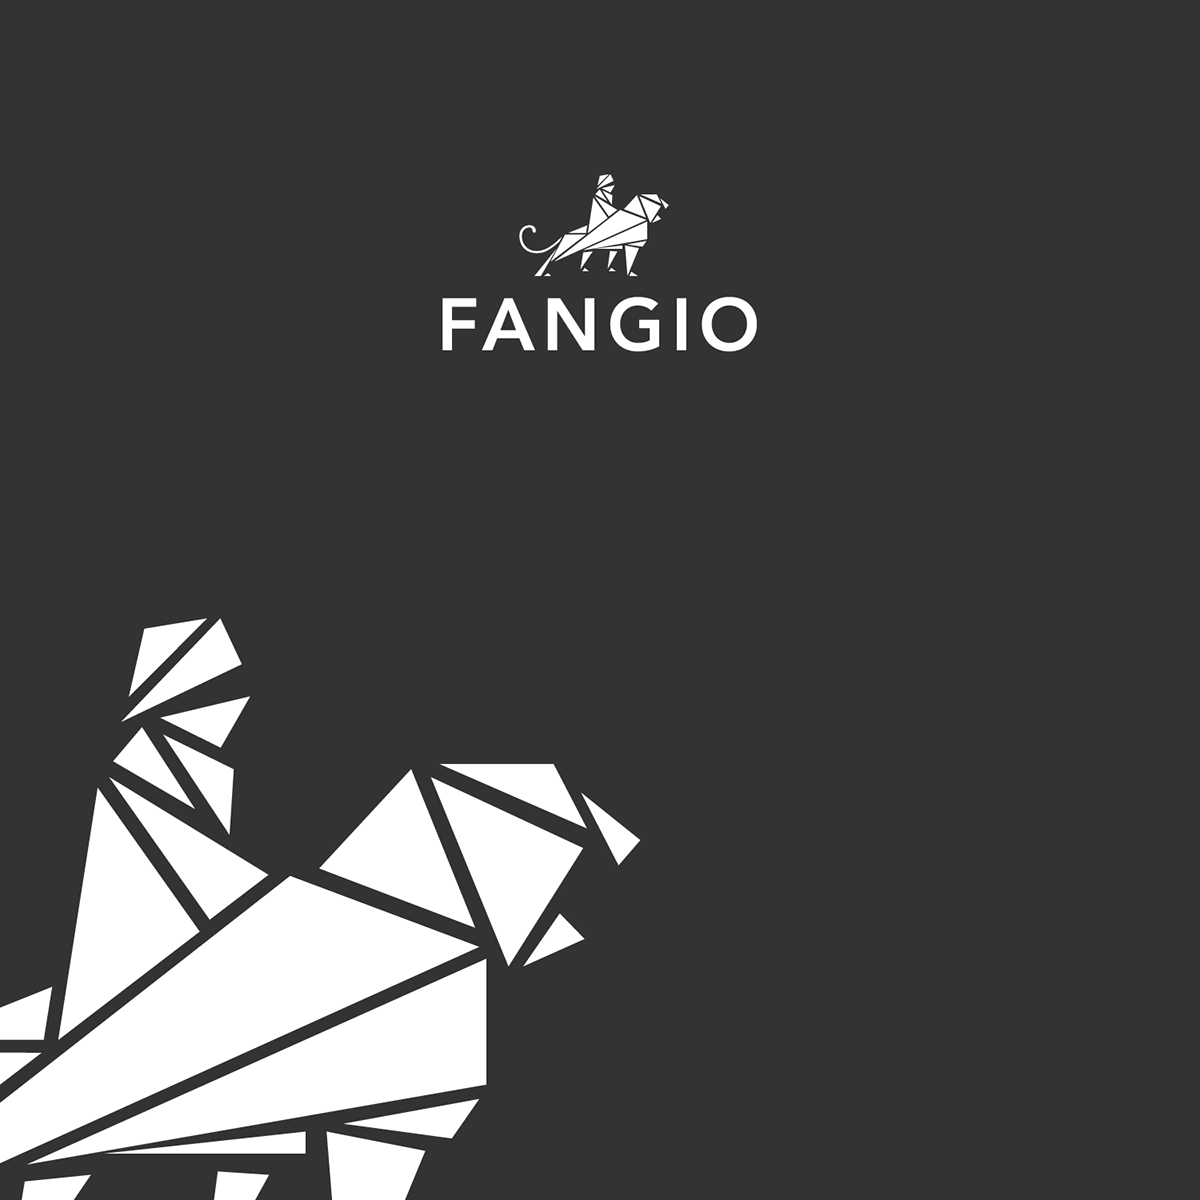 fangio prince sand logo design identity brand graphic lion tiger men man jungle desert